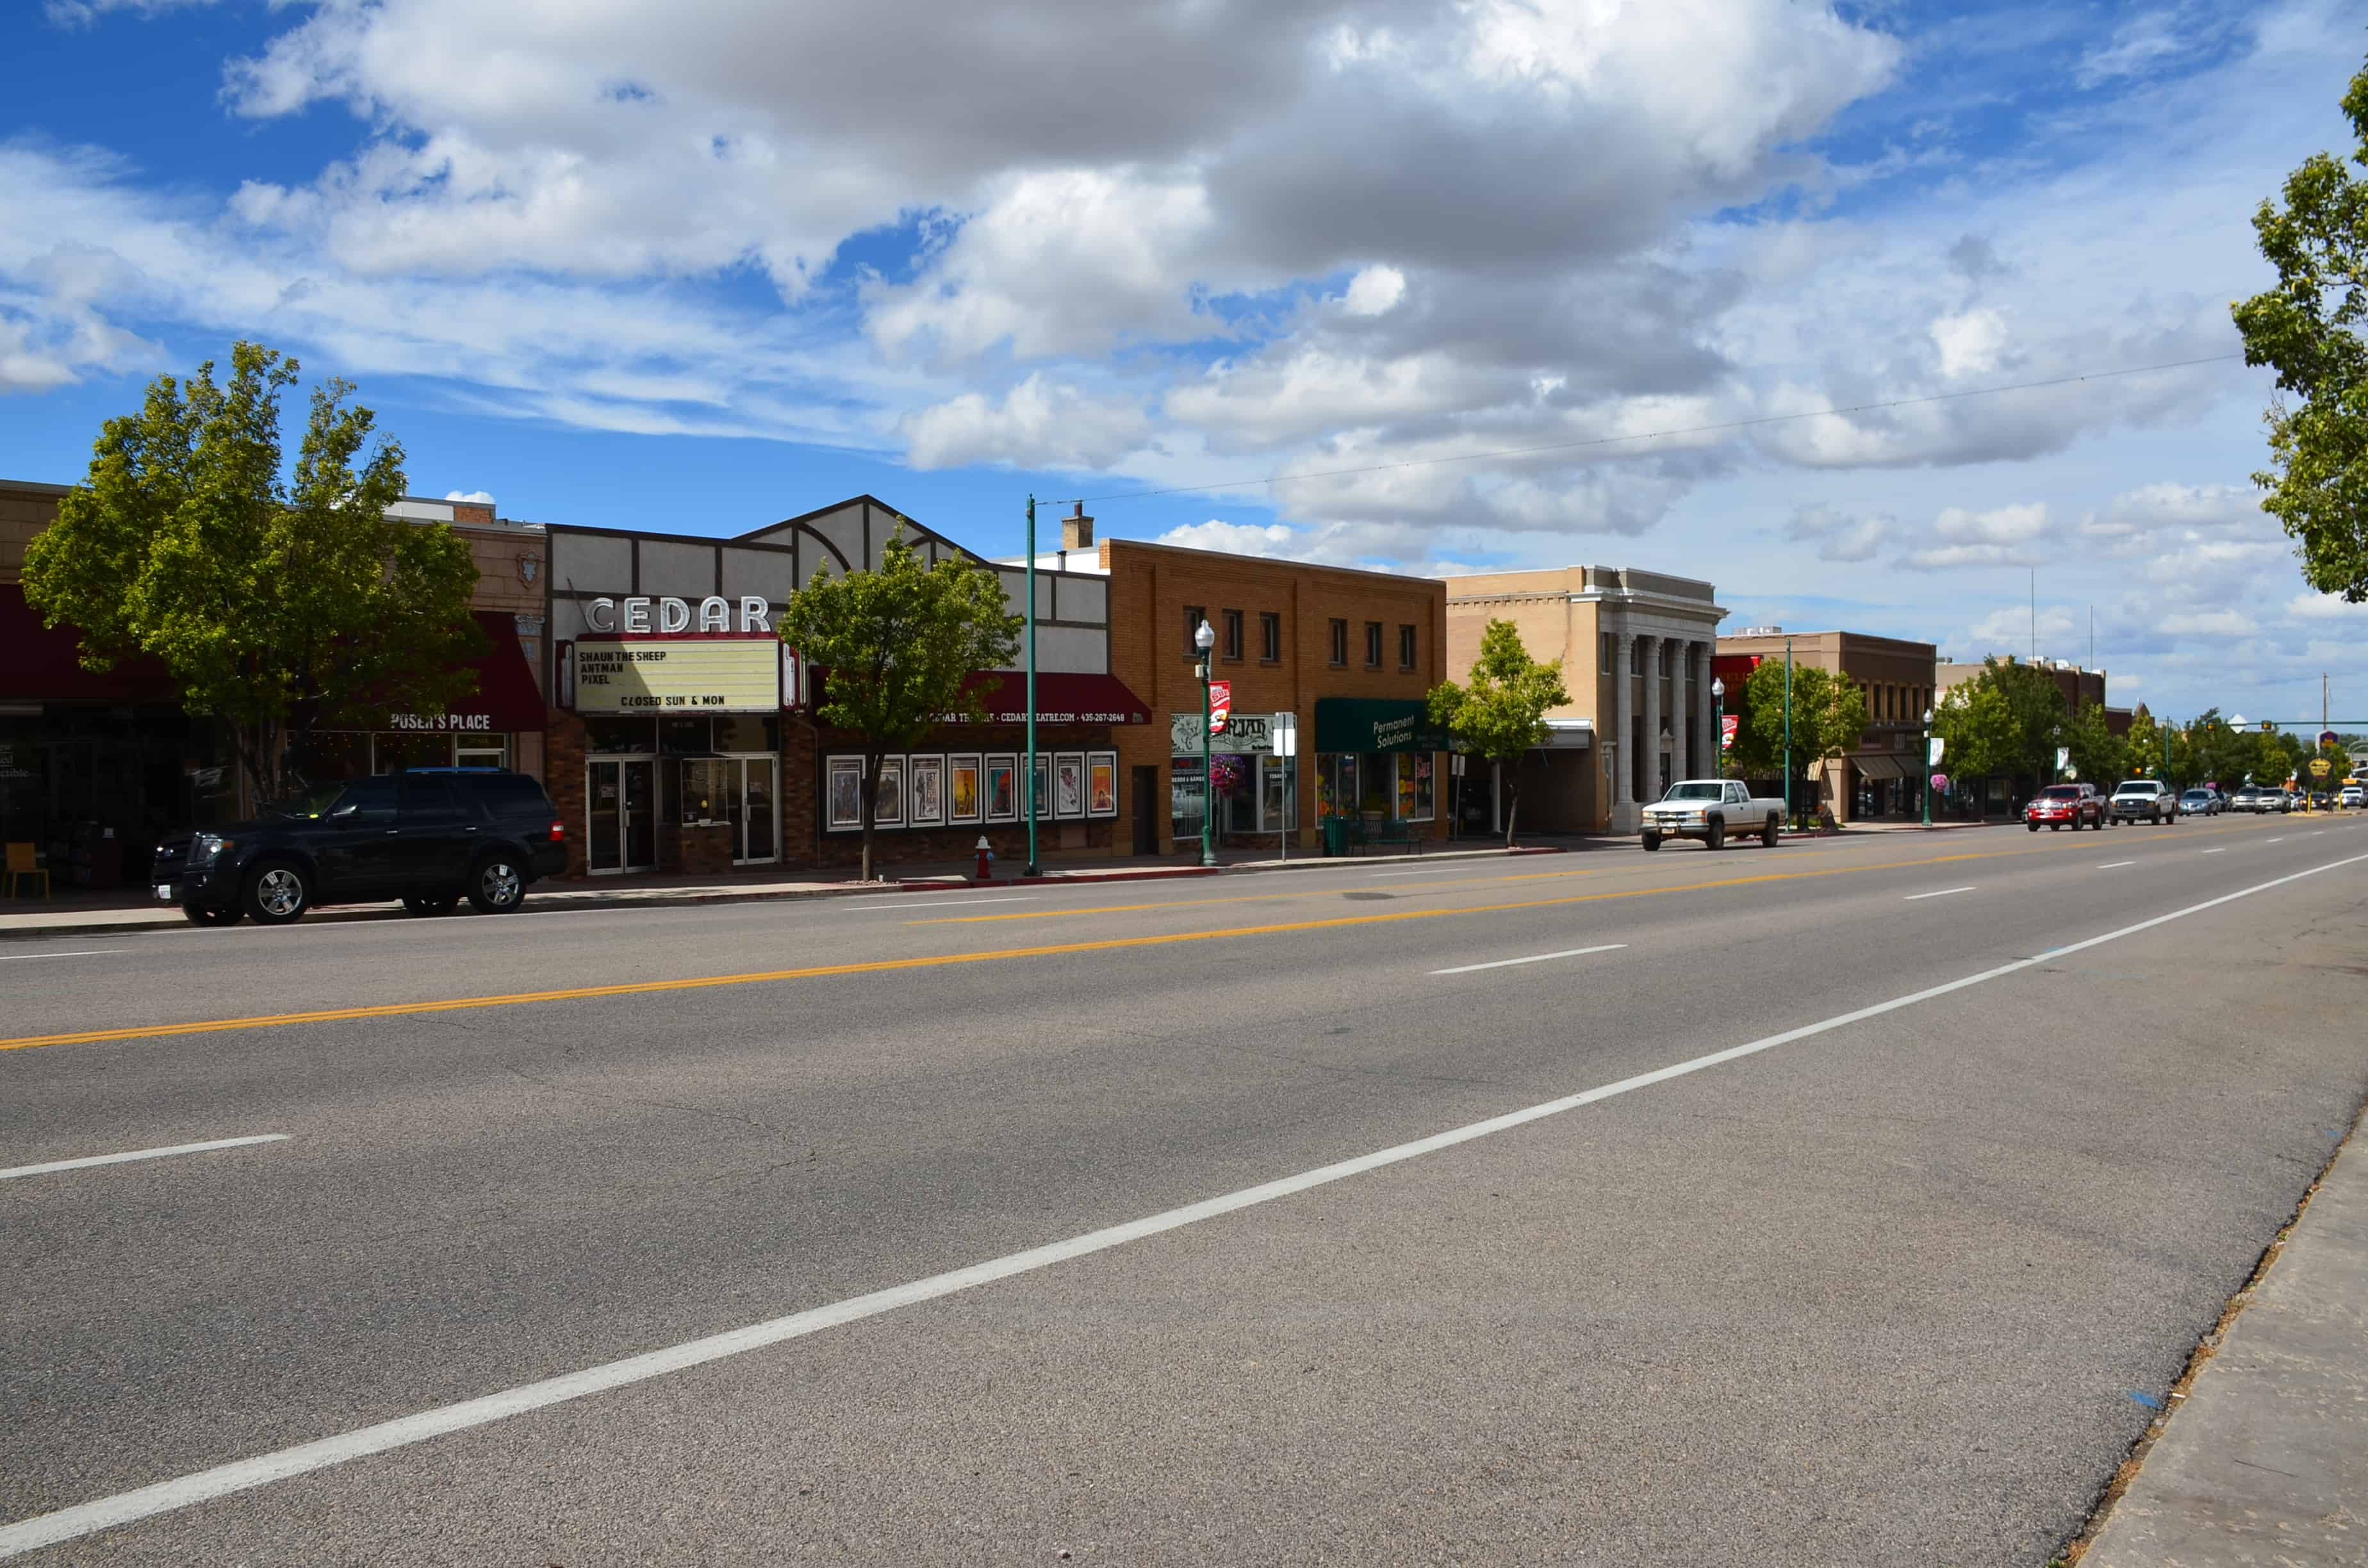 Main Street in Cedar City, Utah